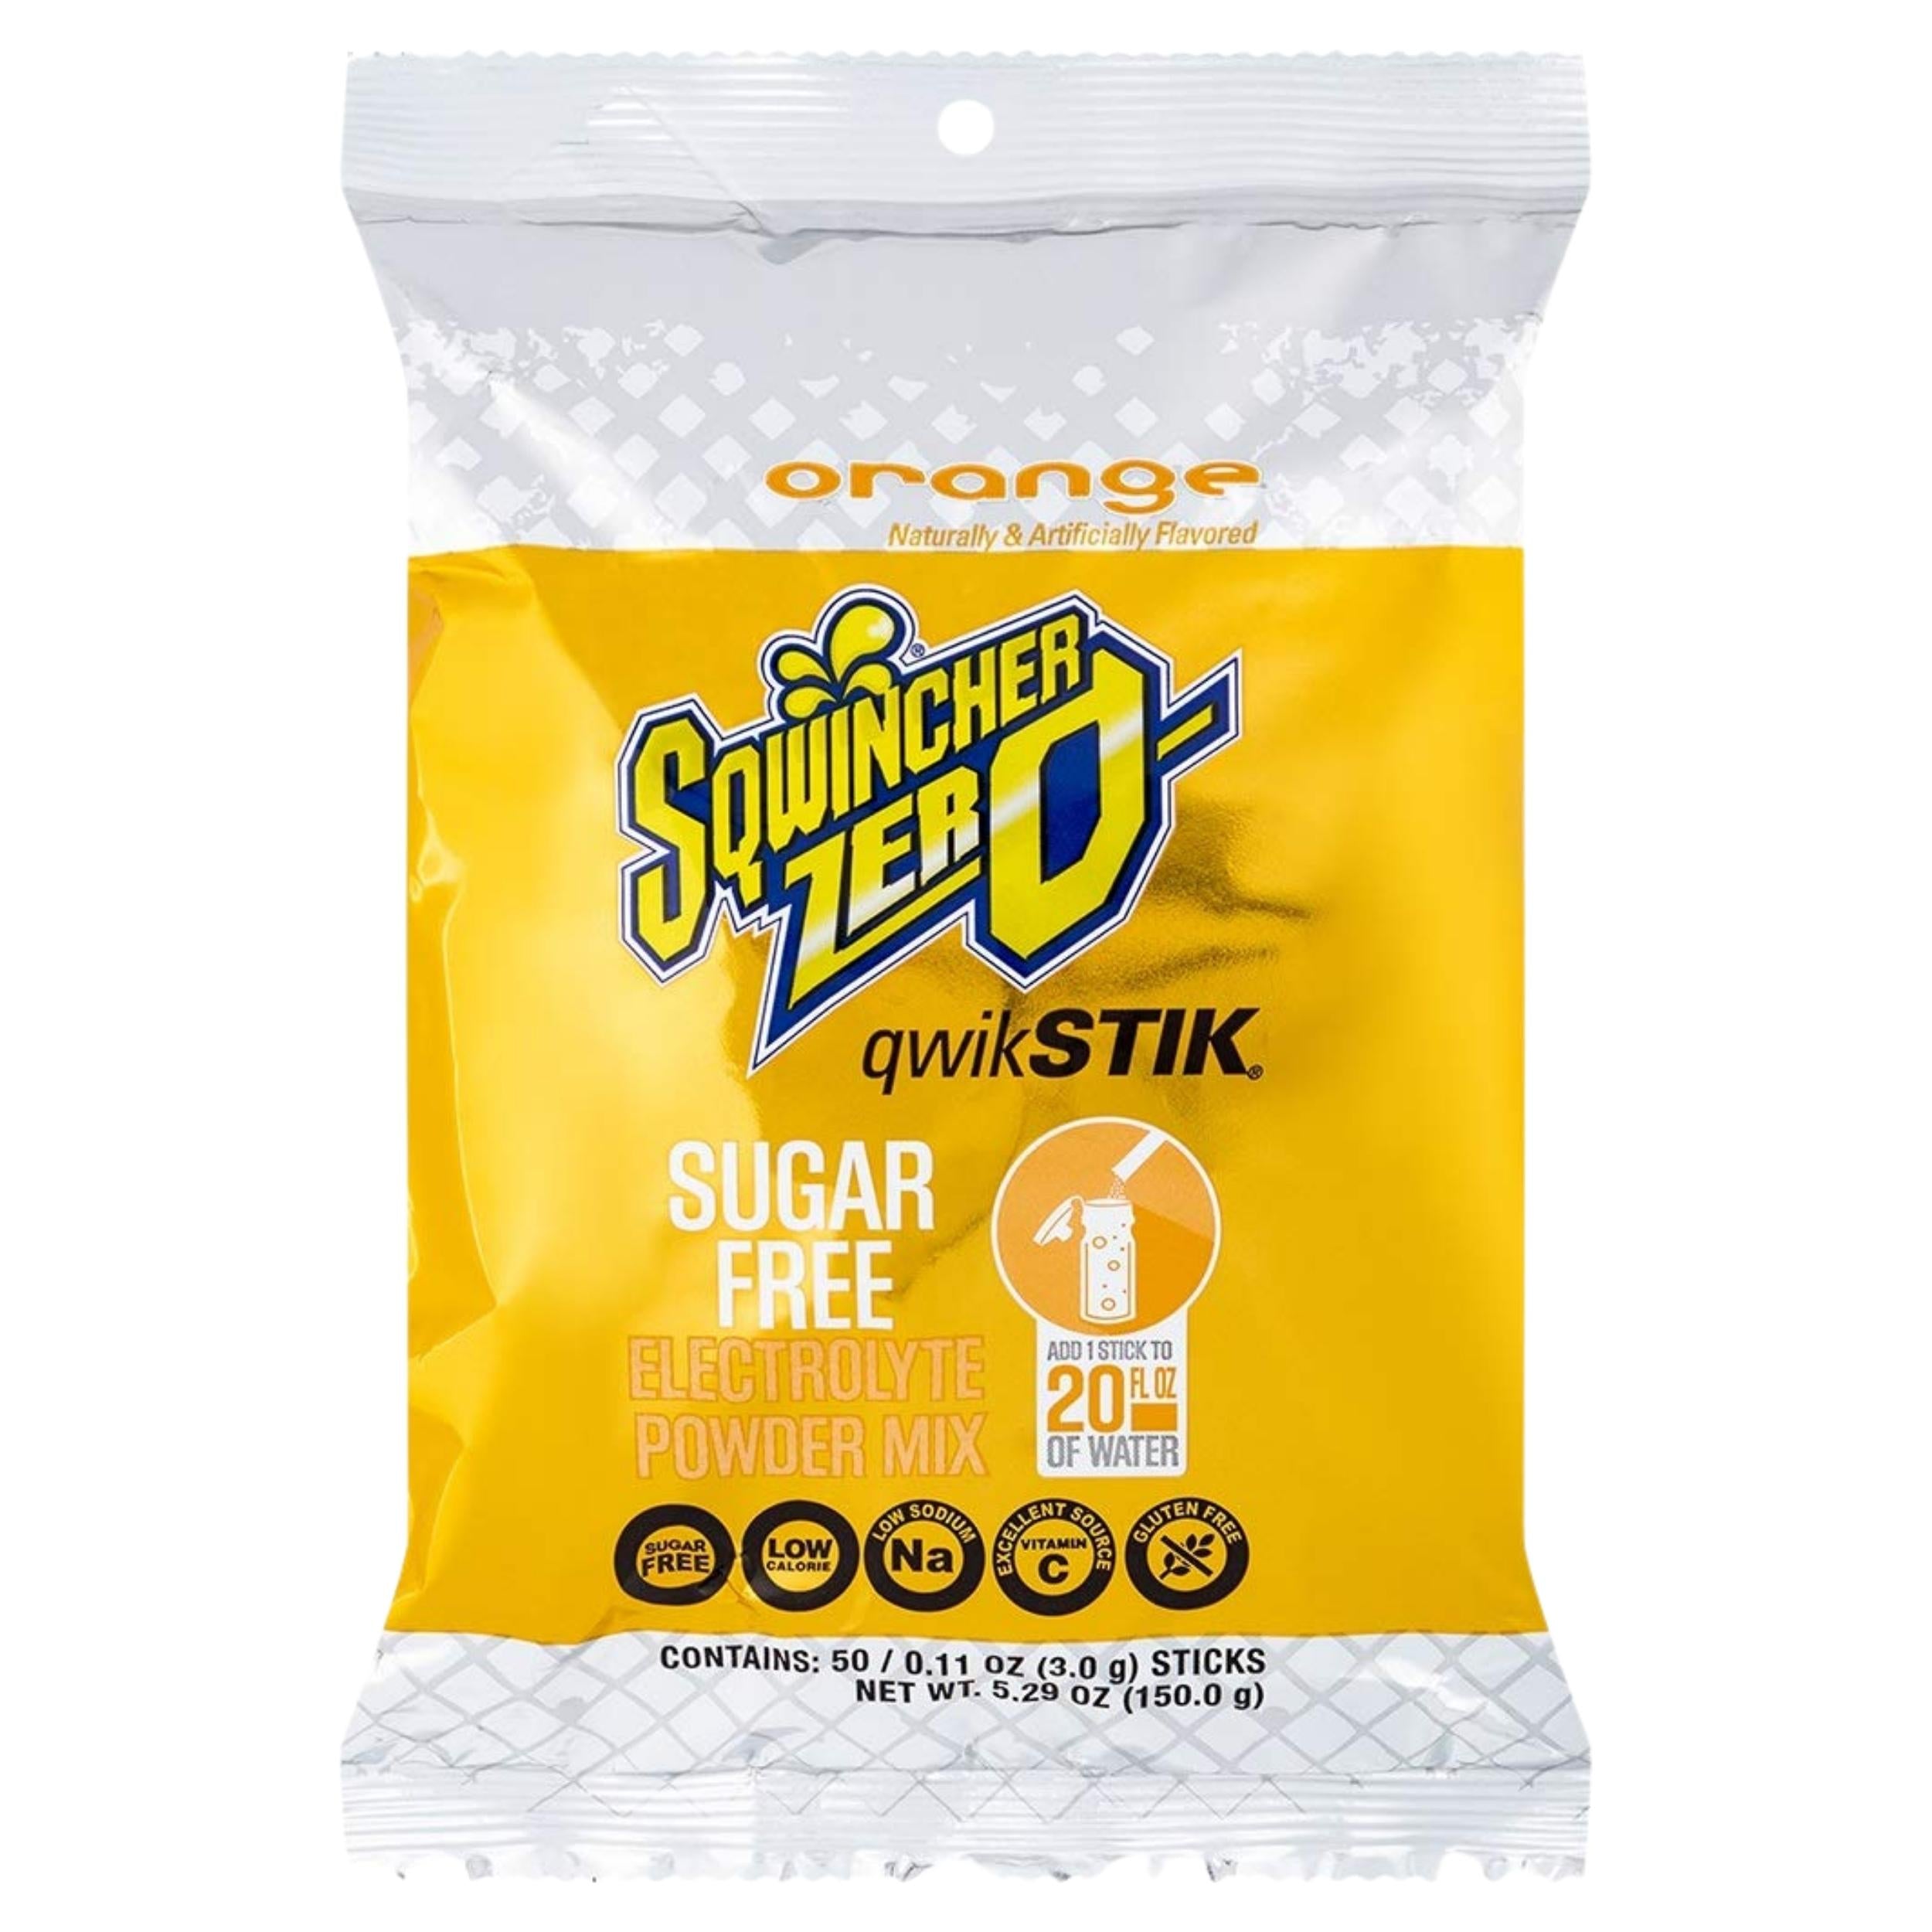 SQWINCHER- Qwik Stik ZERO Sugar-Free Instant Electrolyte Drink Mix, Single Serve Powder Pack